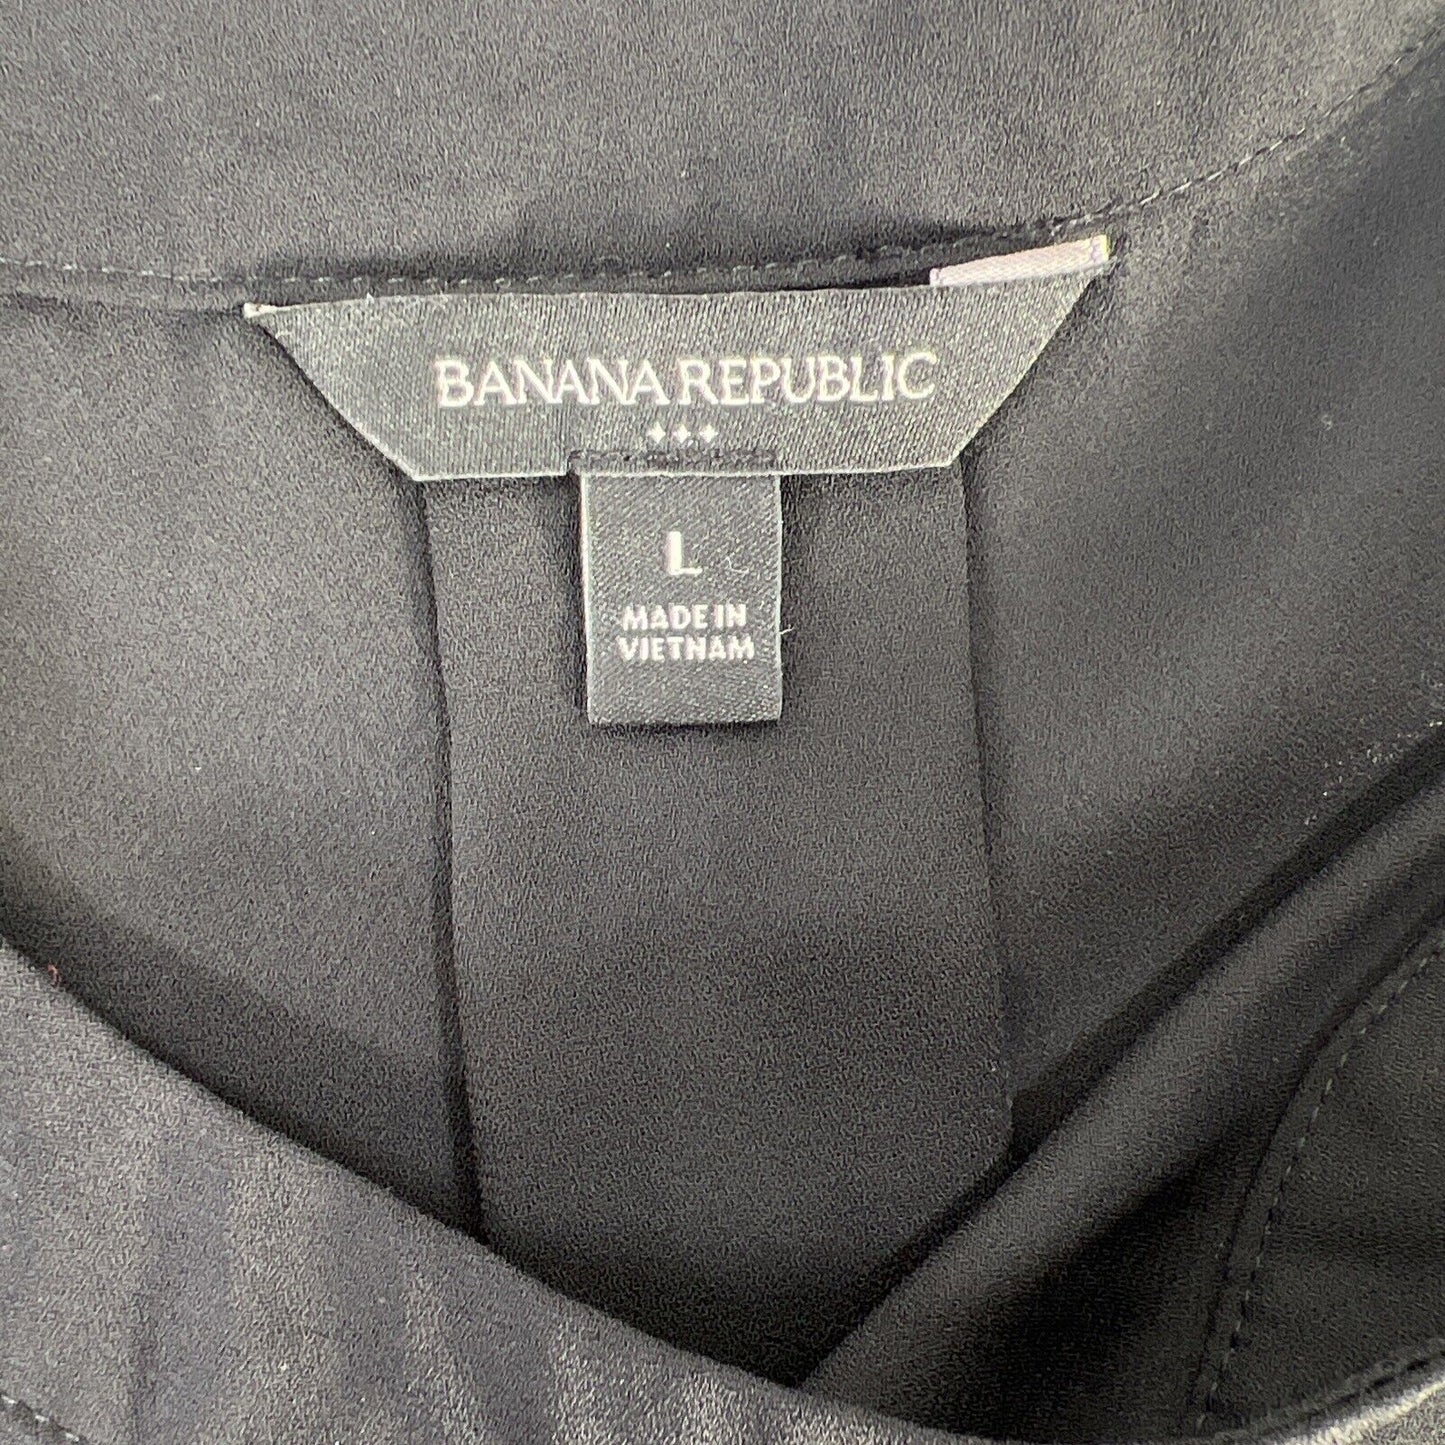 Banana Republic Women's Black Long Sleeve Sheer Top Blouse - L